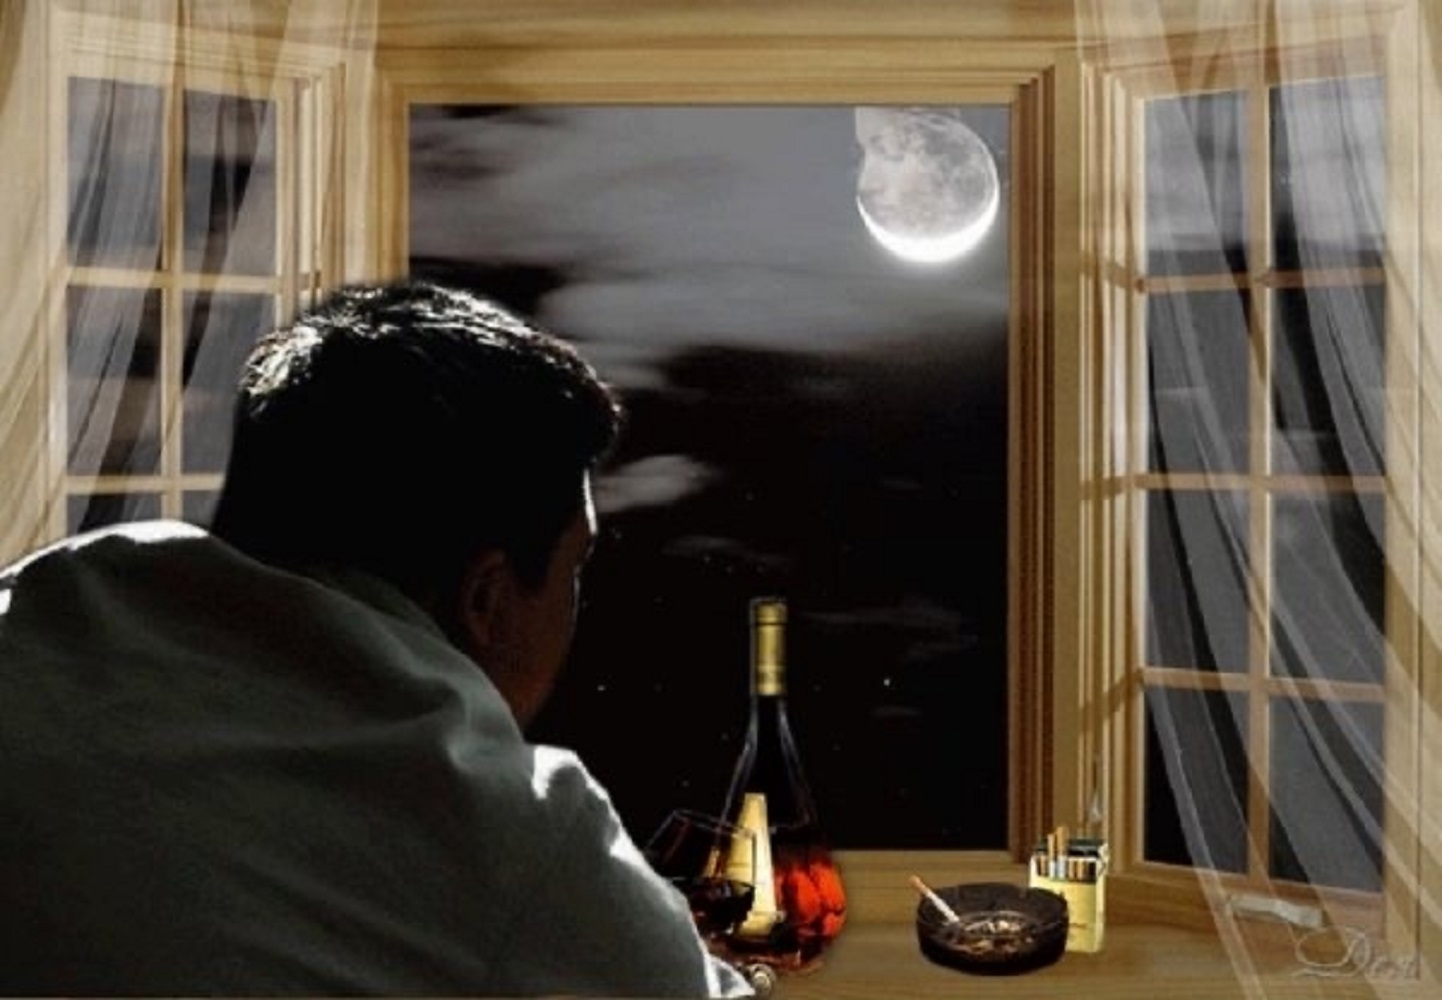 И снова стучит в окно. Окно вечер. Мужчина грустит. Мужчина у окна. Человек за окном.